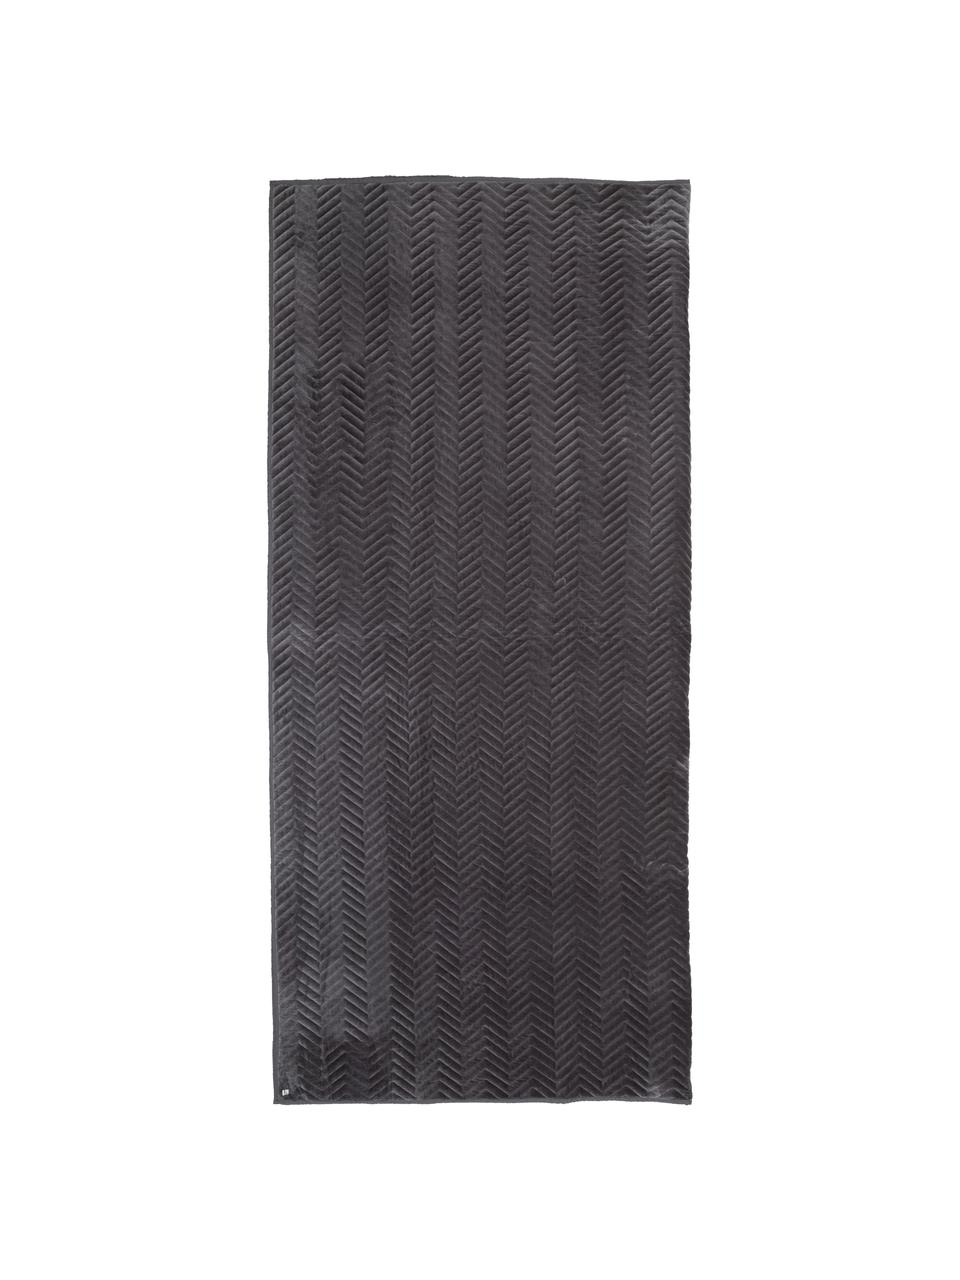 Fluwelen bedsprei Chevron, Katoen fluweel, Grijs, 240 x 260 cm